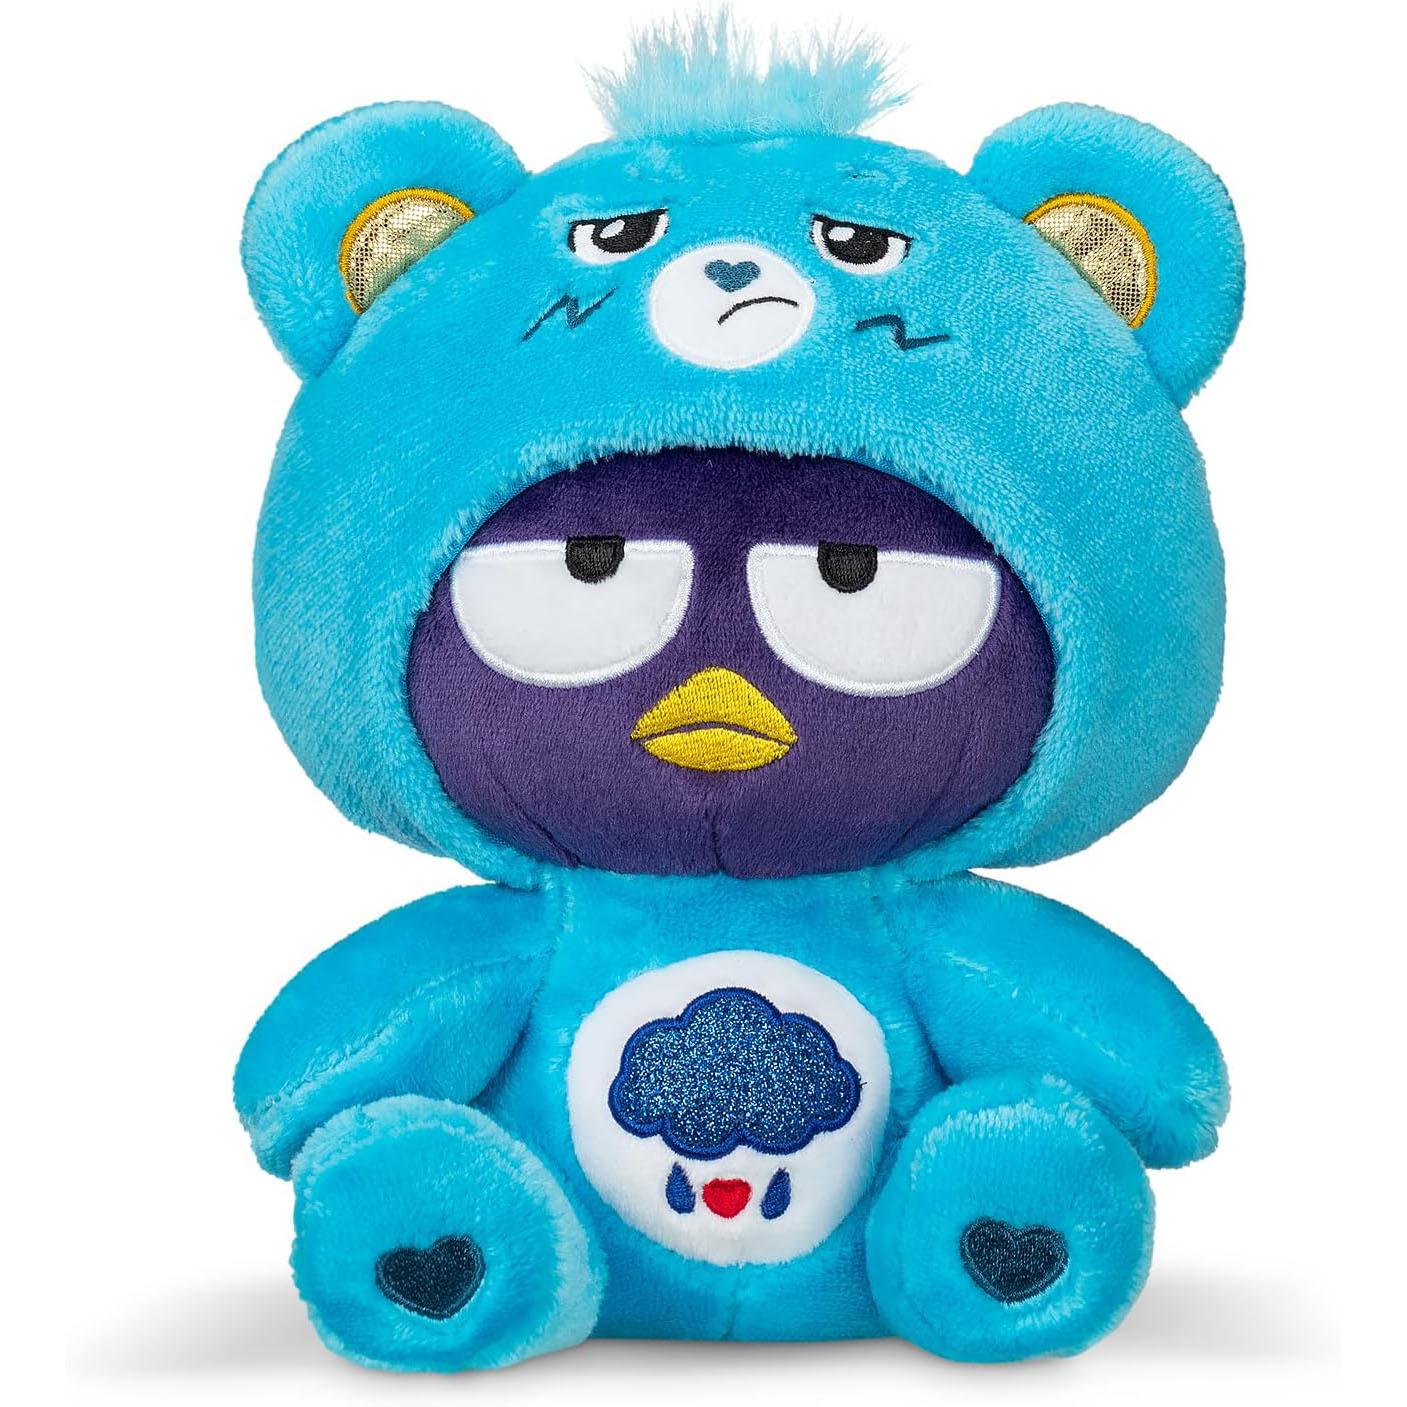 Care Bears Badtz-Maru Dressed As Grumpy Bear Plush Toy for $9.97